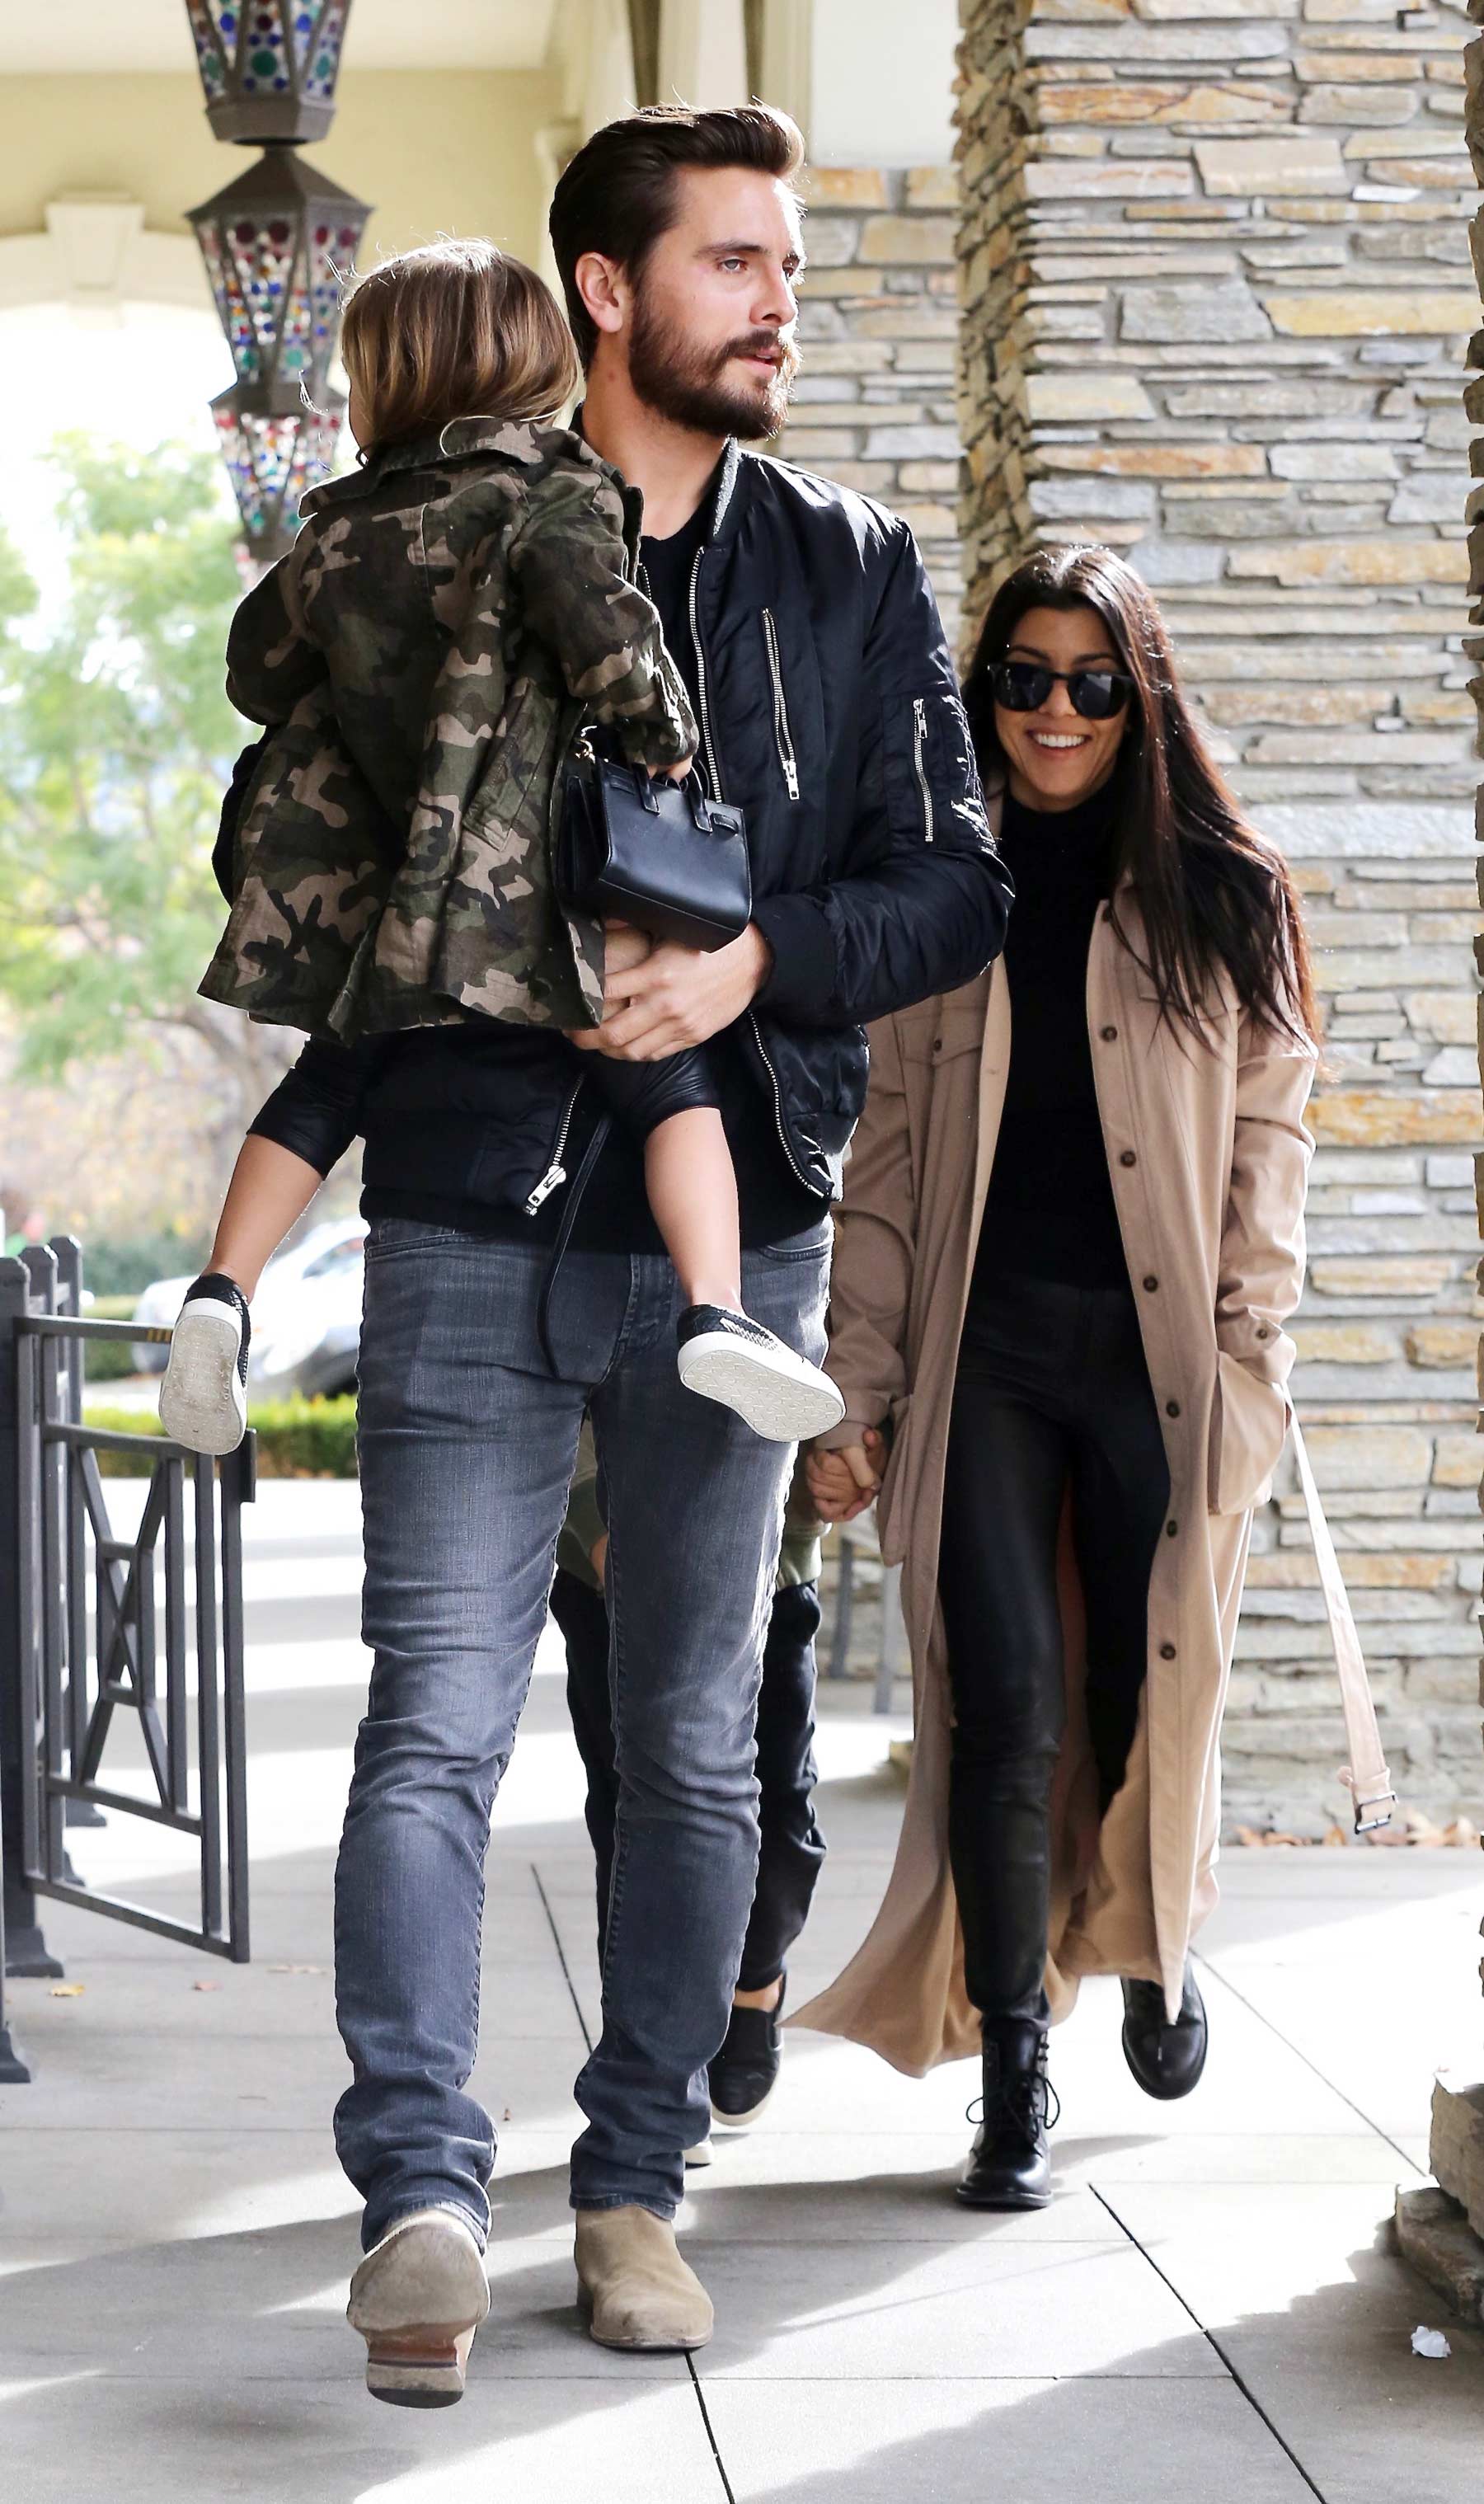 Kourtney Kardashian at a movie theater with her family